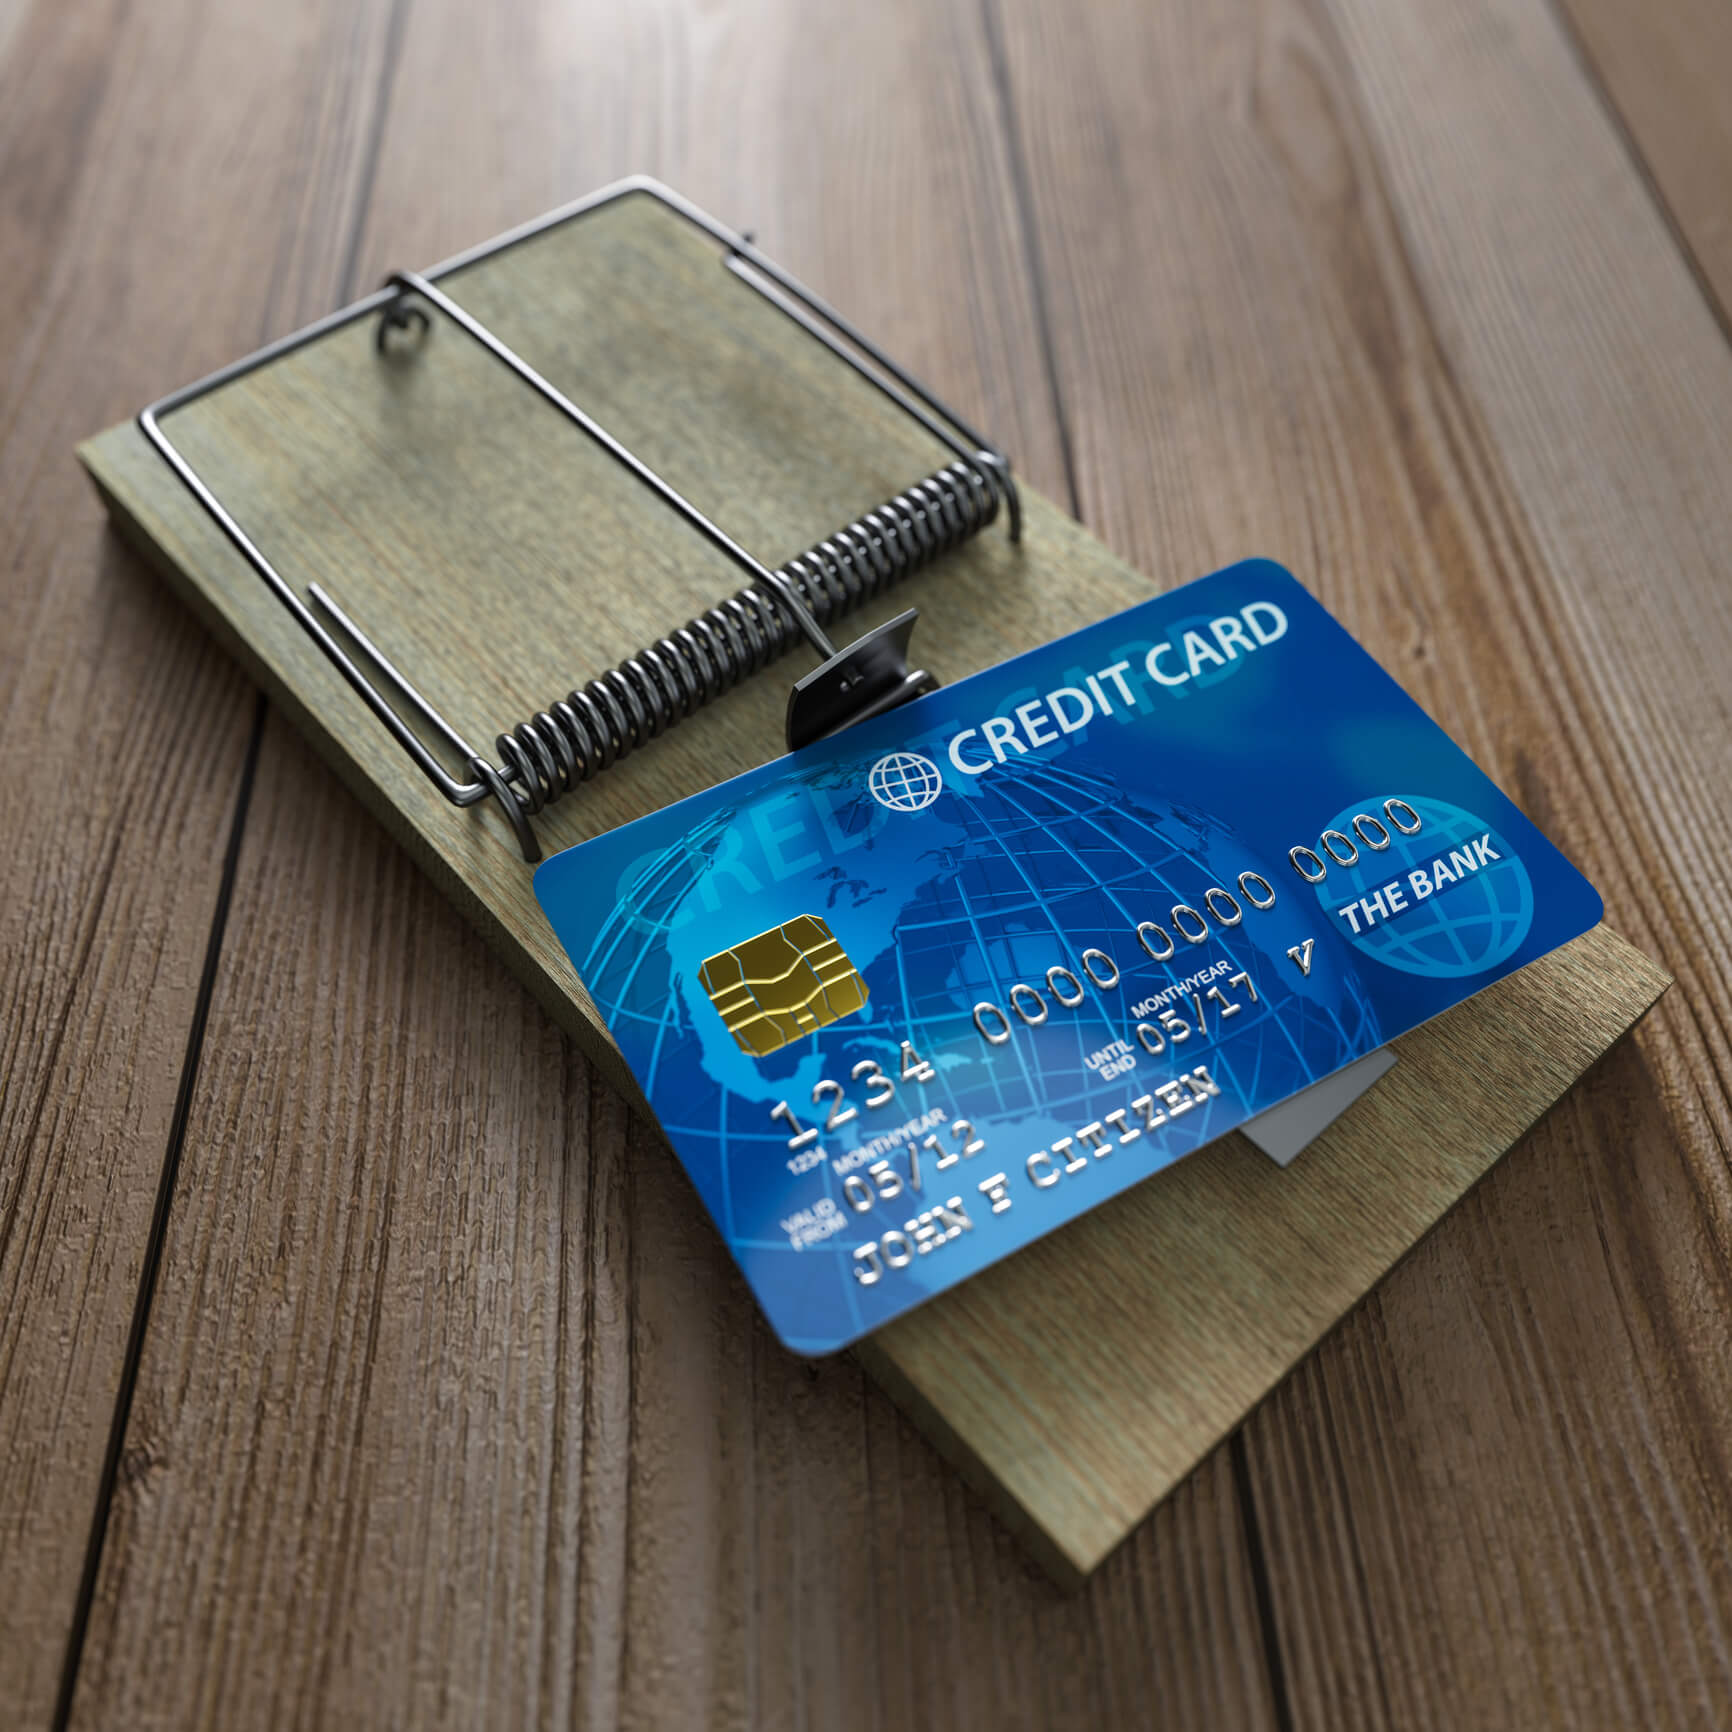 credit card sign-up bonuses - mouse trap